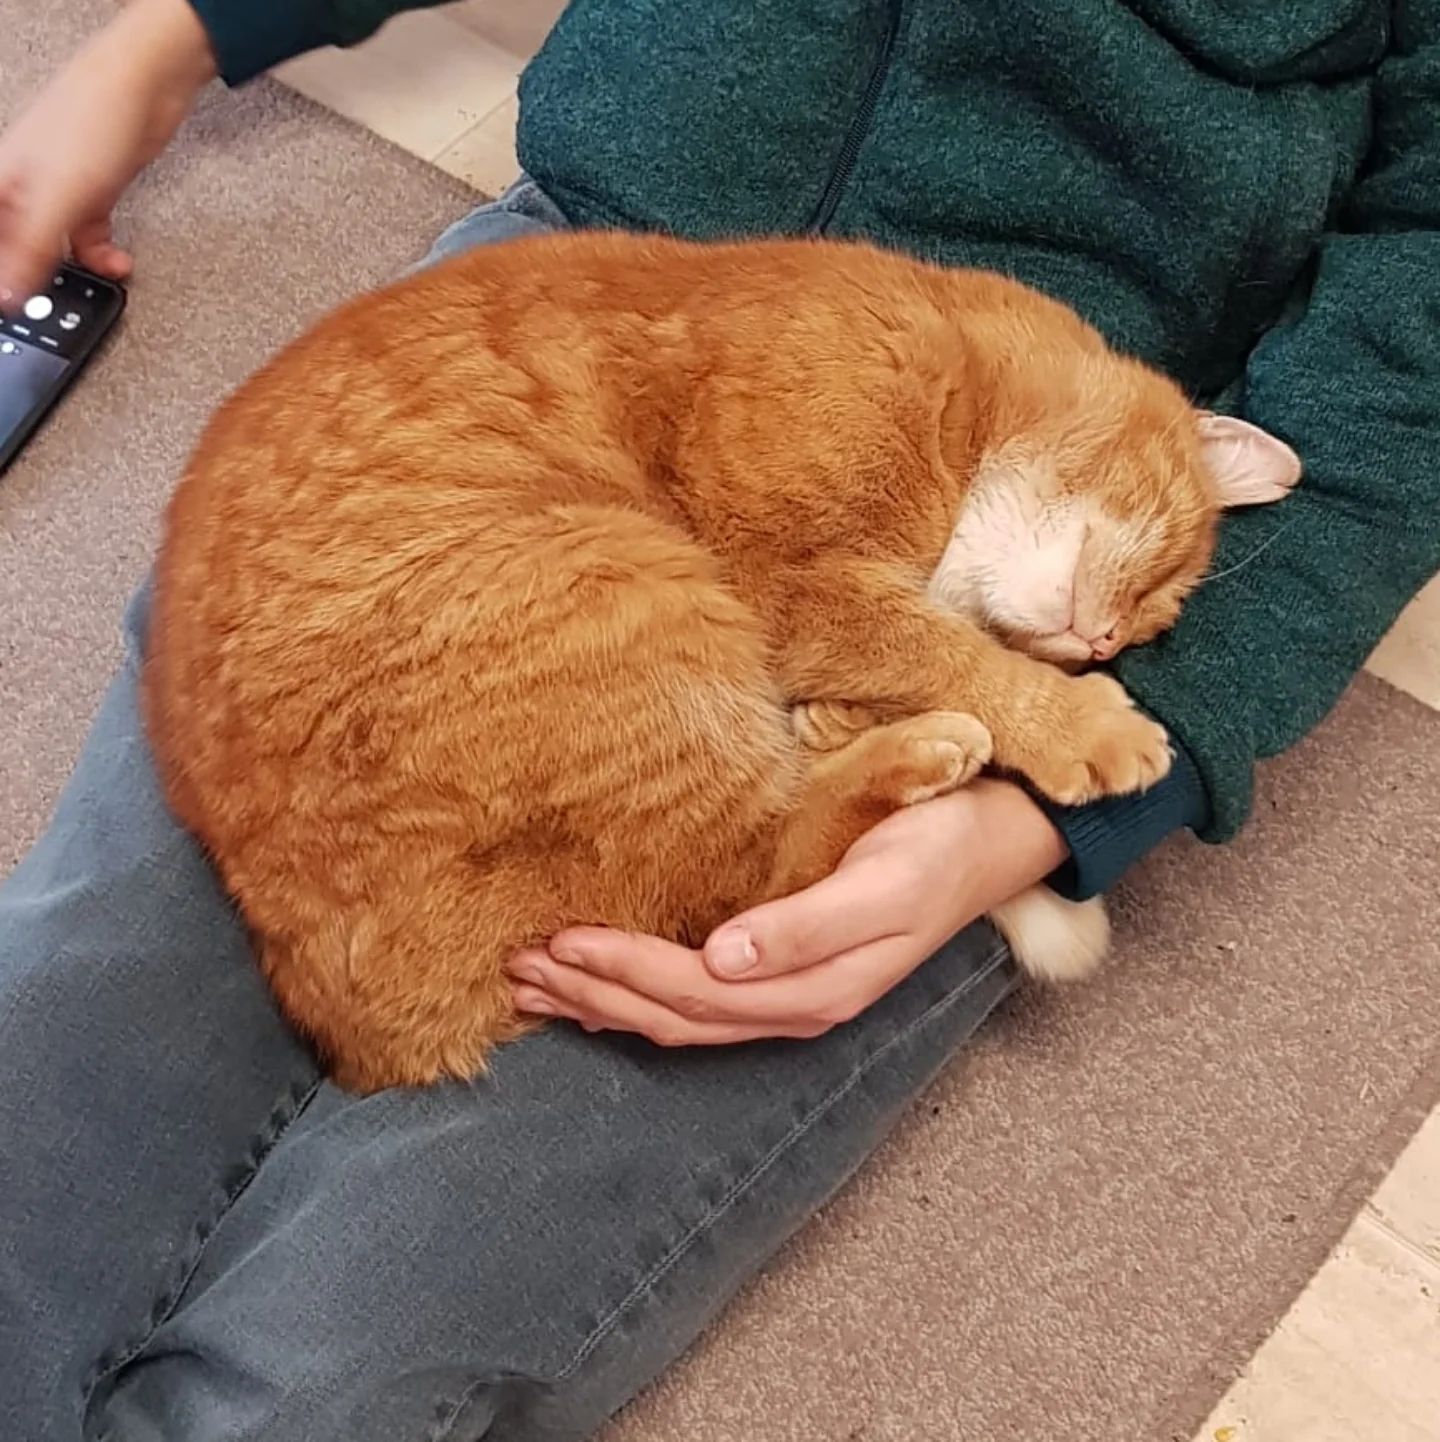 orange cat curled up asleep in someone's lap